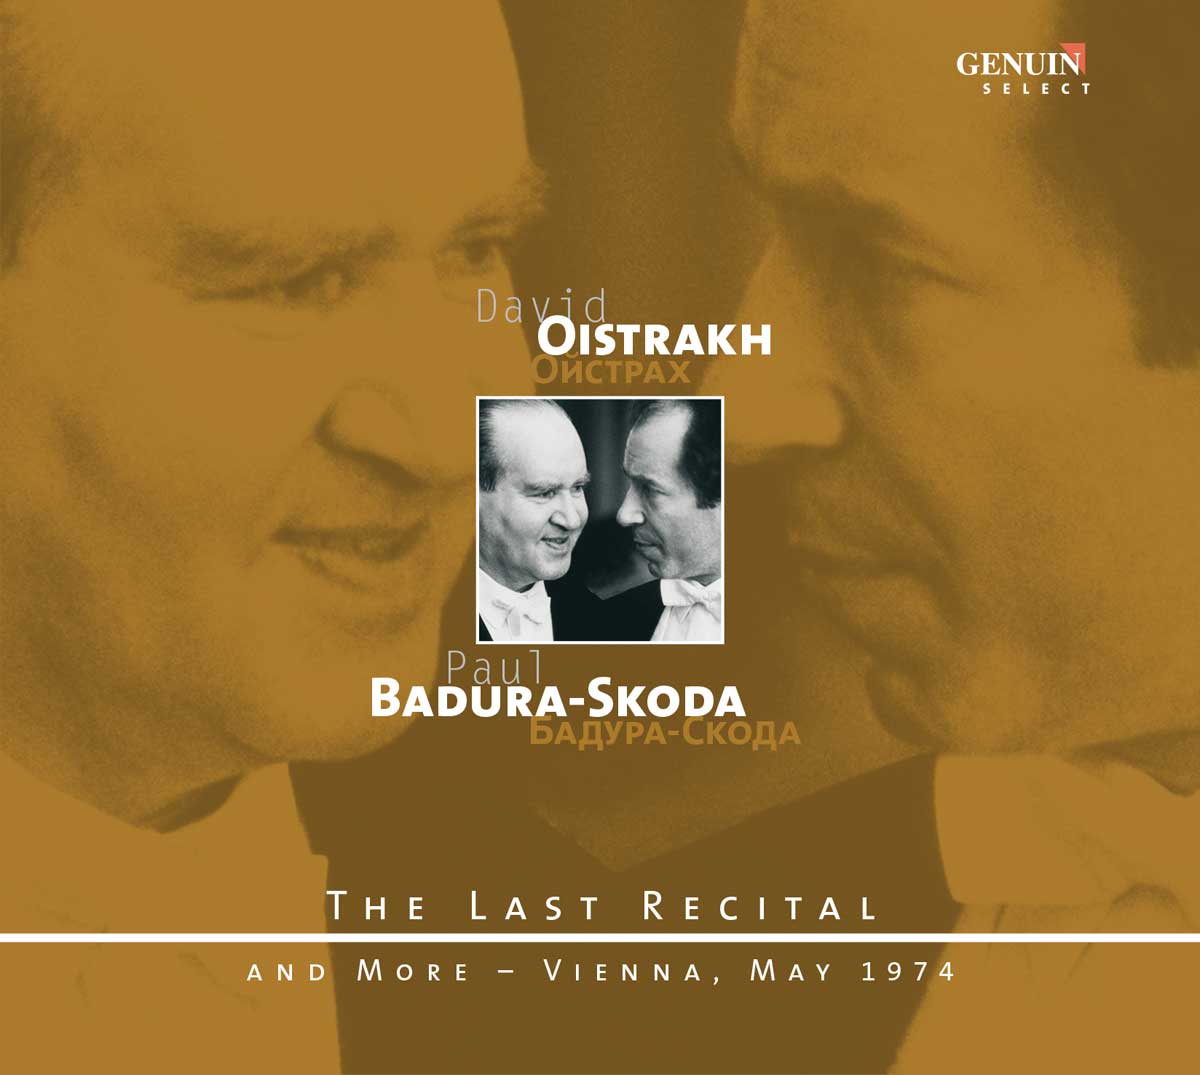 CD album cover 'The Last Recital' (GEN 85050) with David Oistrach, Paul Badura-Skoda